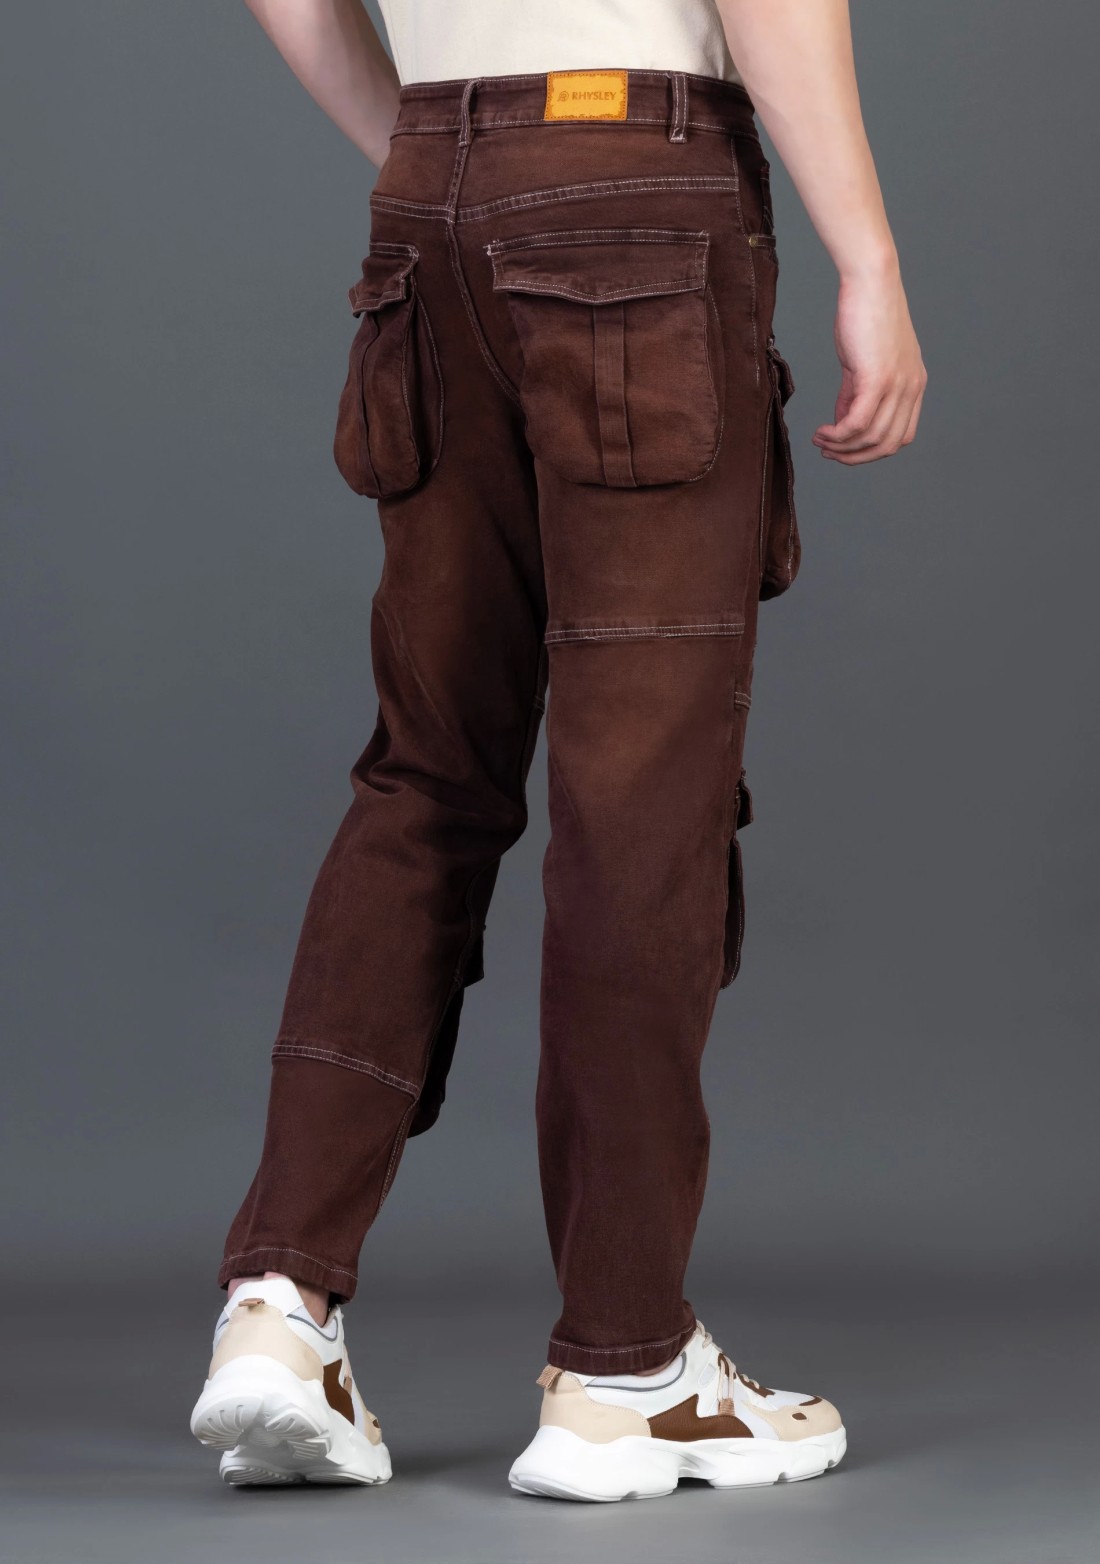 Chocolate Brown Slim Fit Rhysley Men's Fashion Jeans